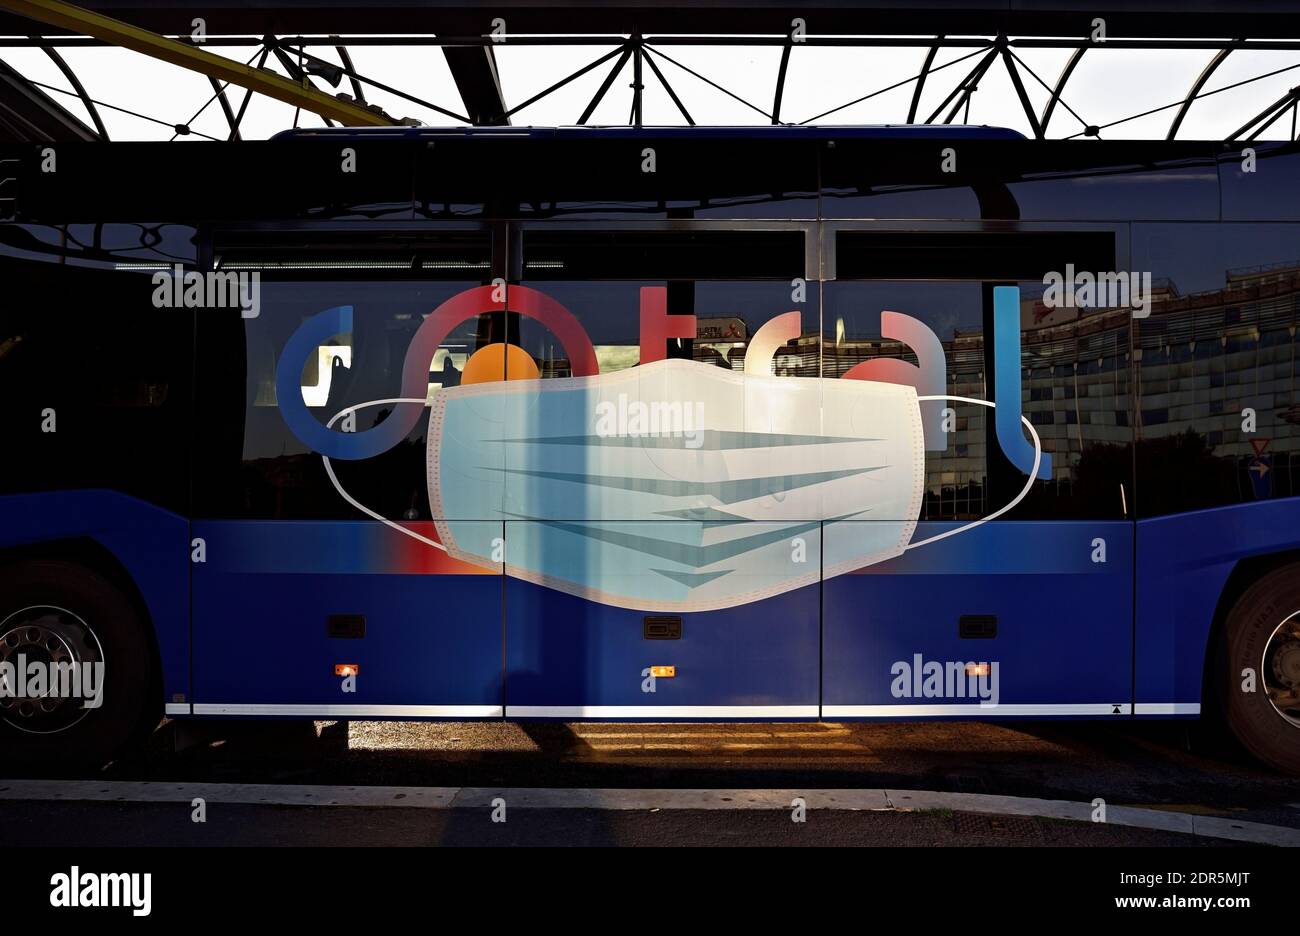 Coronavirus, Covid 19 mask advertising sign warning on the side of a bus. Public transportation. Rome, Italy, Europe, EU Stock Photo